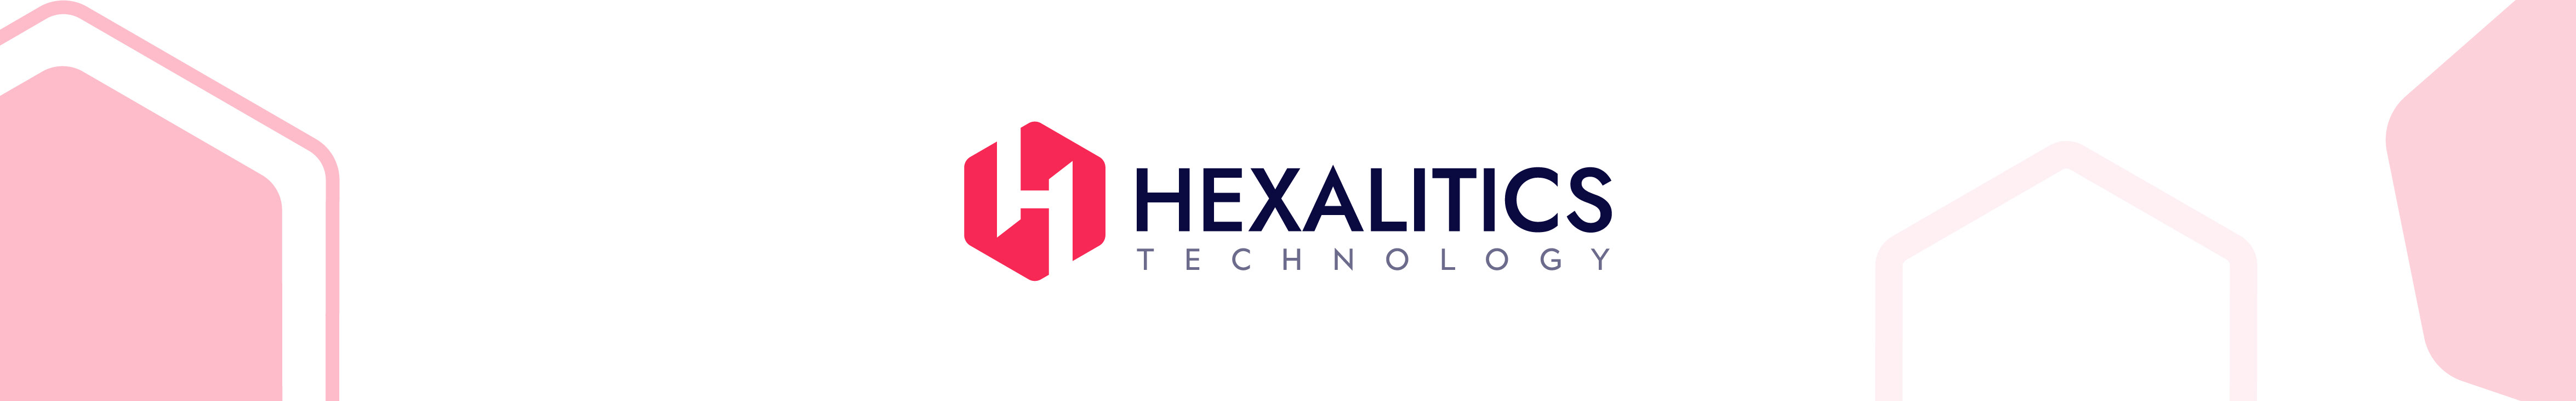 Baner profilu użytkownika Hexalitics Technology